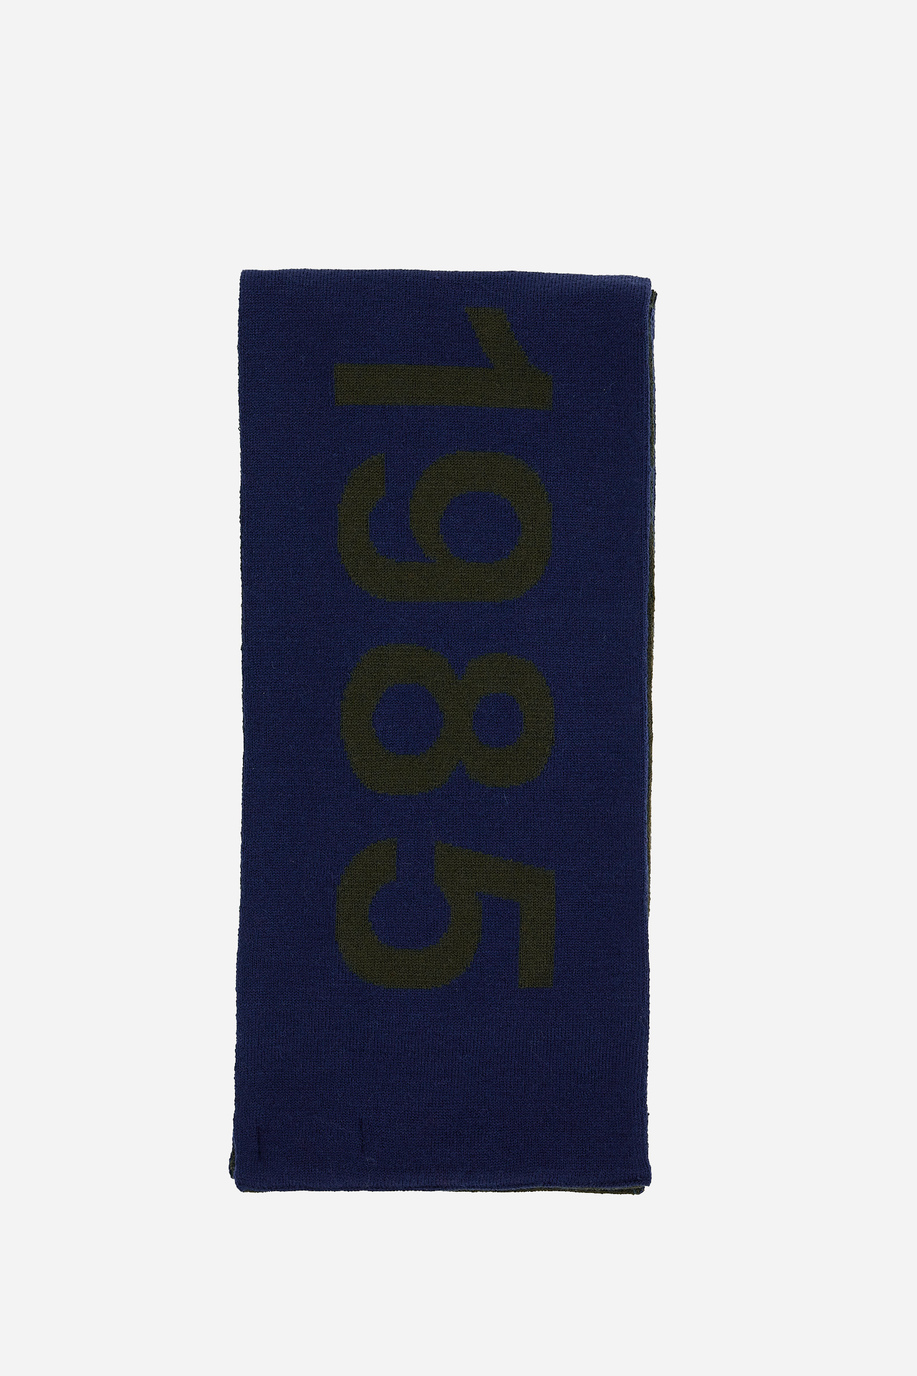 Unisex multicolor scarf - Wardlea - Gifts under $75 for him | La Martina - Official Online Shop